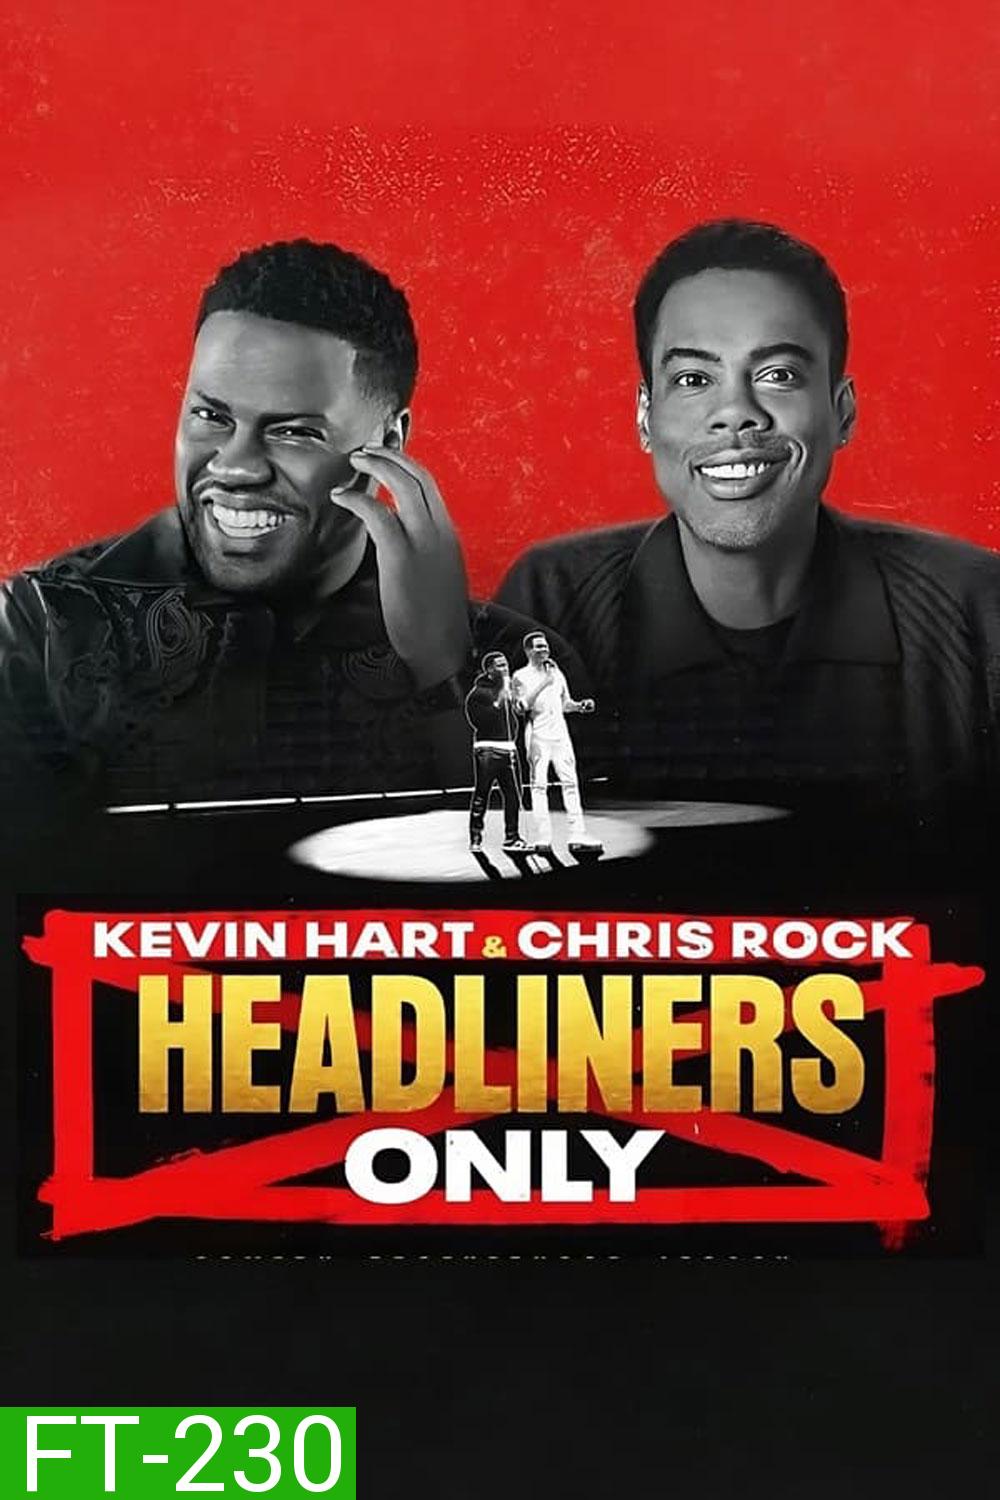 Kevin Hart & Chris Rock Headliners Only (2023) เควิน ฮาร์ทและคริส ร็อค: คนดังเท่านั้น